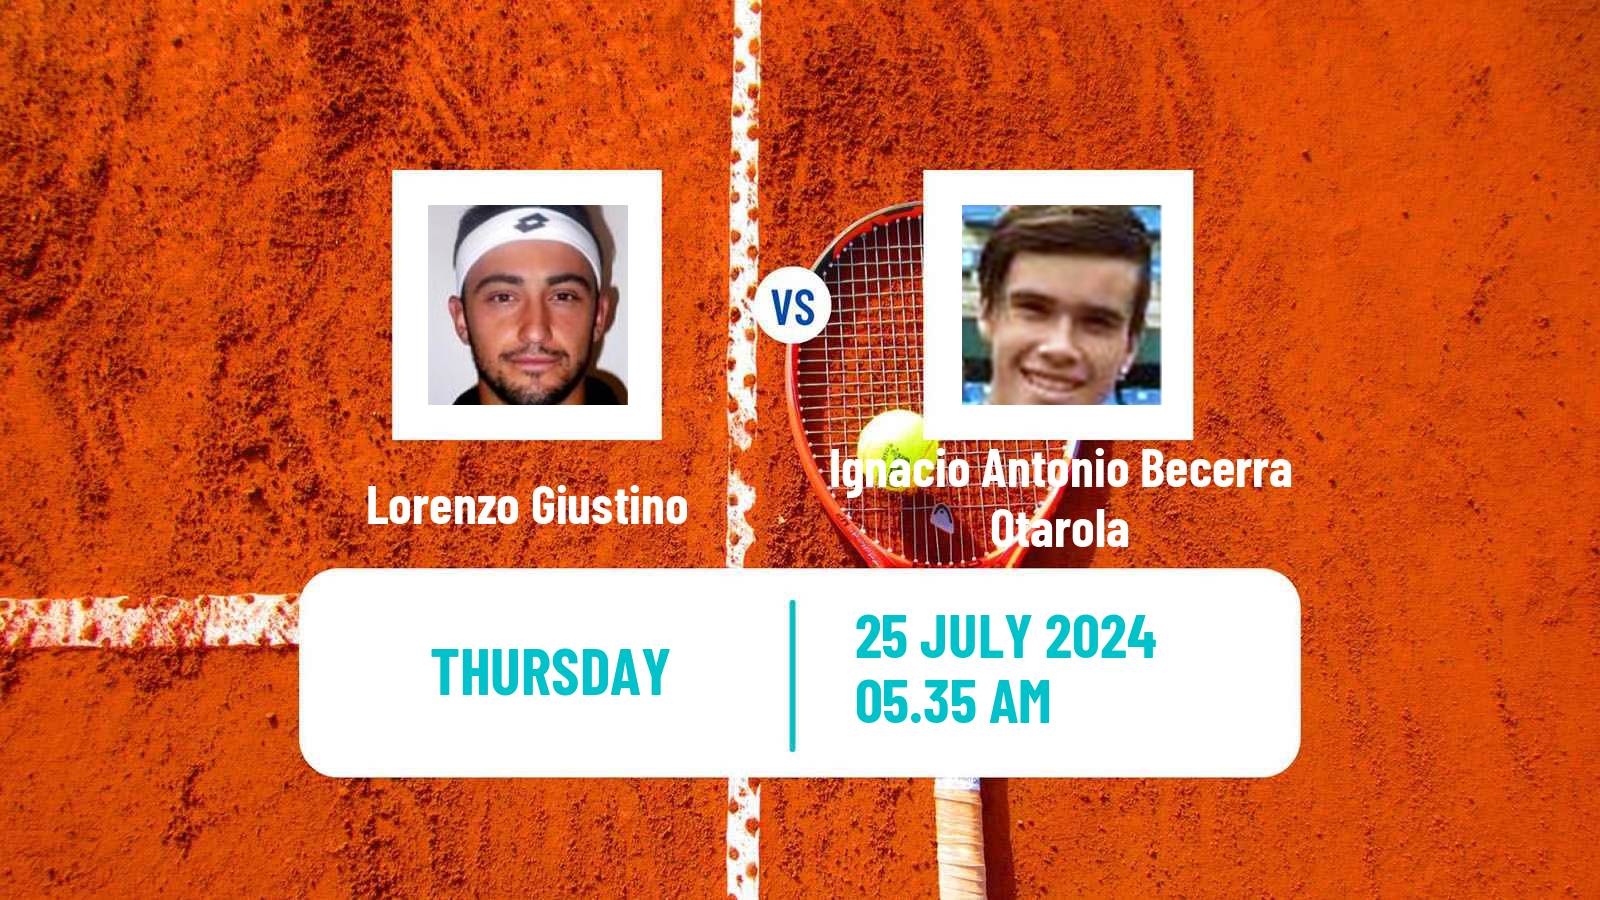 Tennis ITF M25 Denia Men Lorenzo Giustino - Ignacio Antonio Becerra Otarola